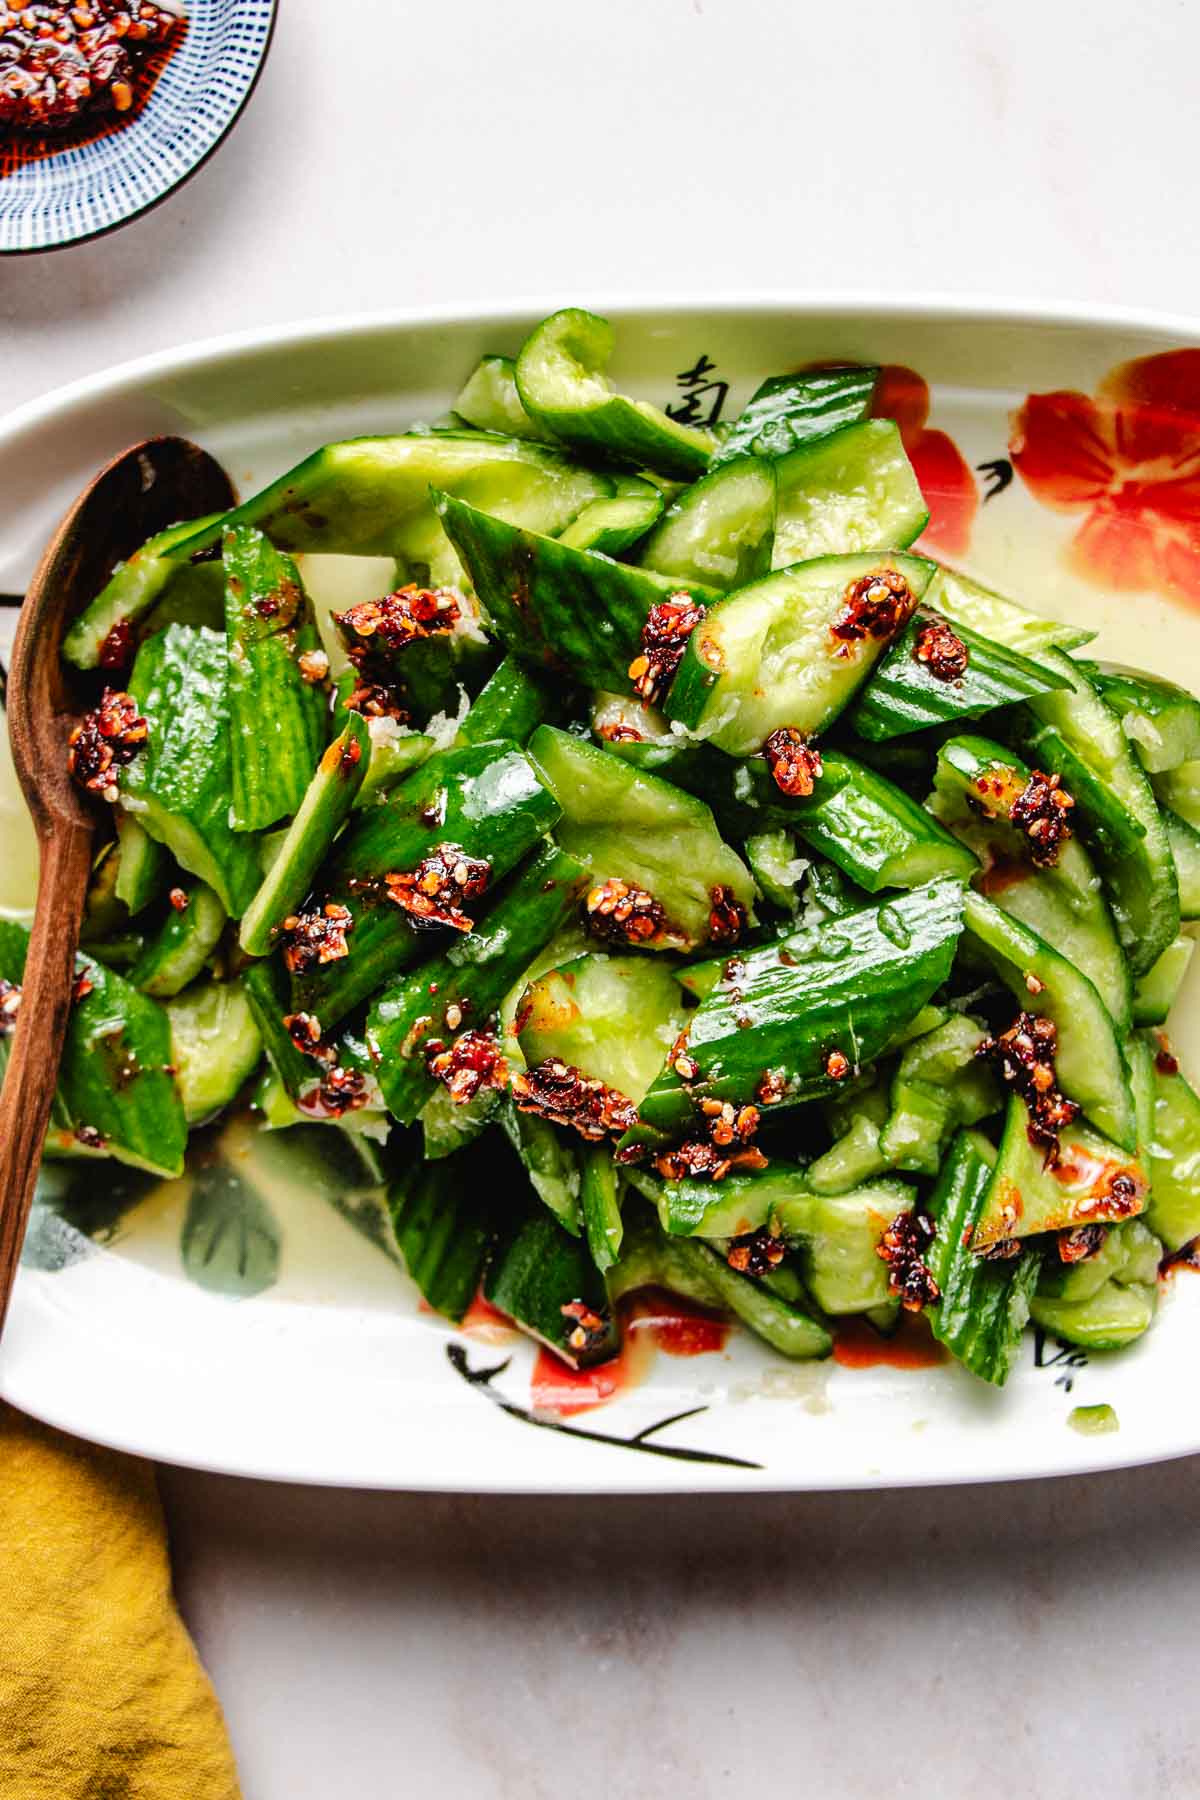 https://iheartumami.com/wp-content/uploads/2018/07/Chinese-smashed-cucumber-salad.jpg